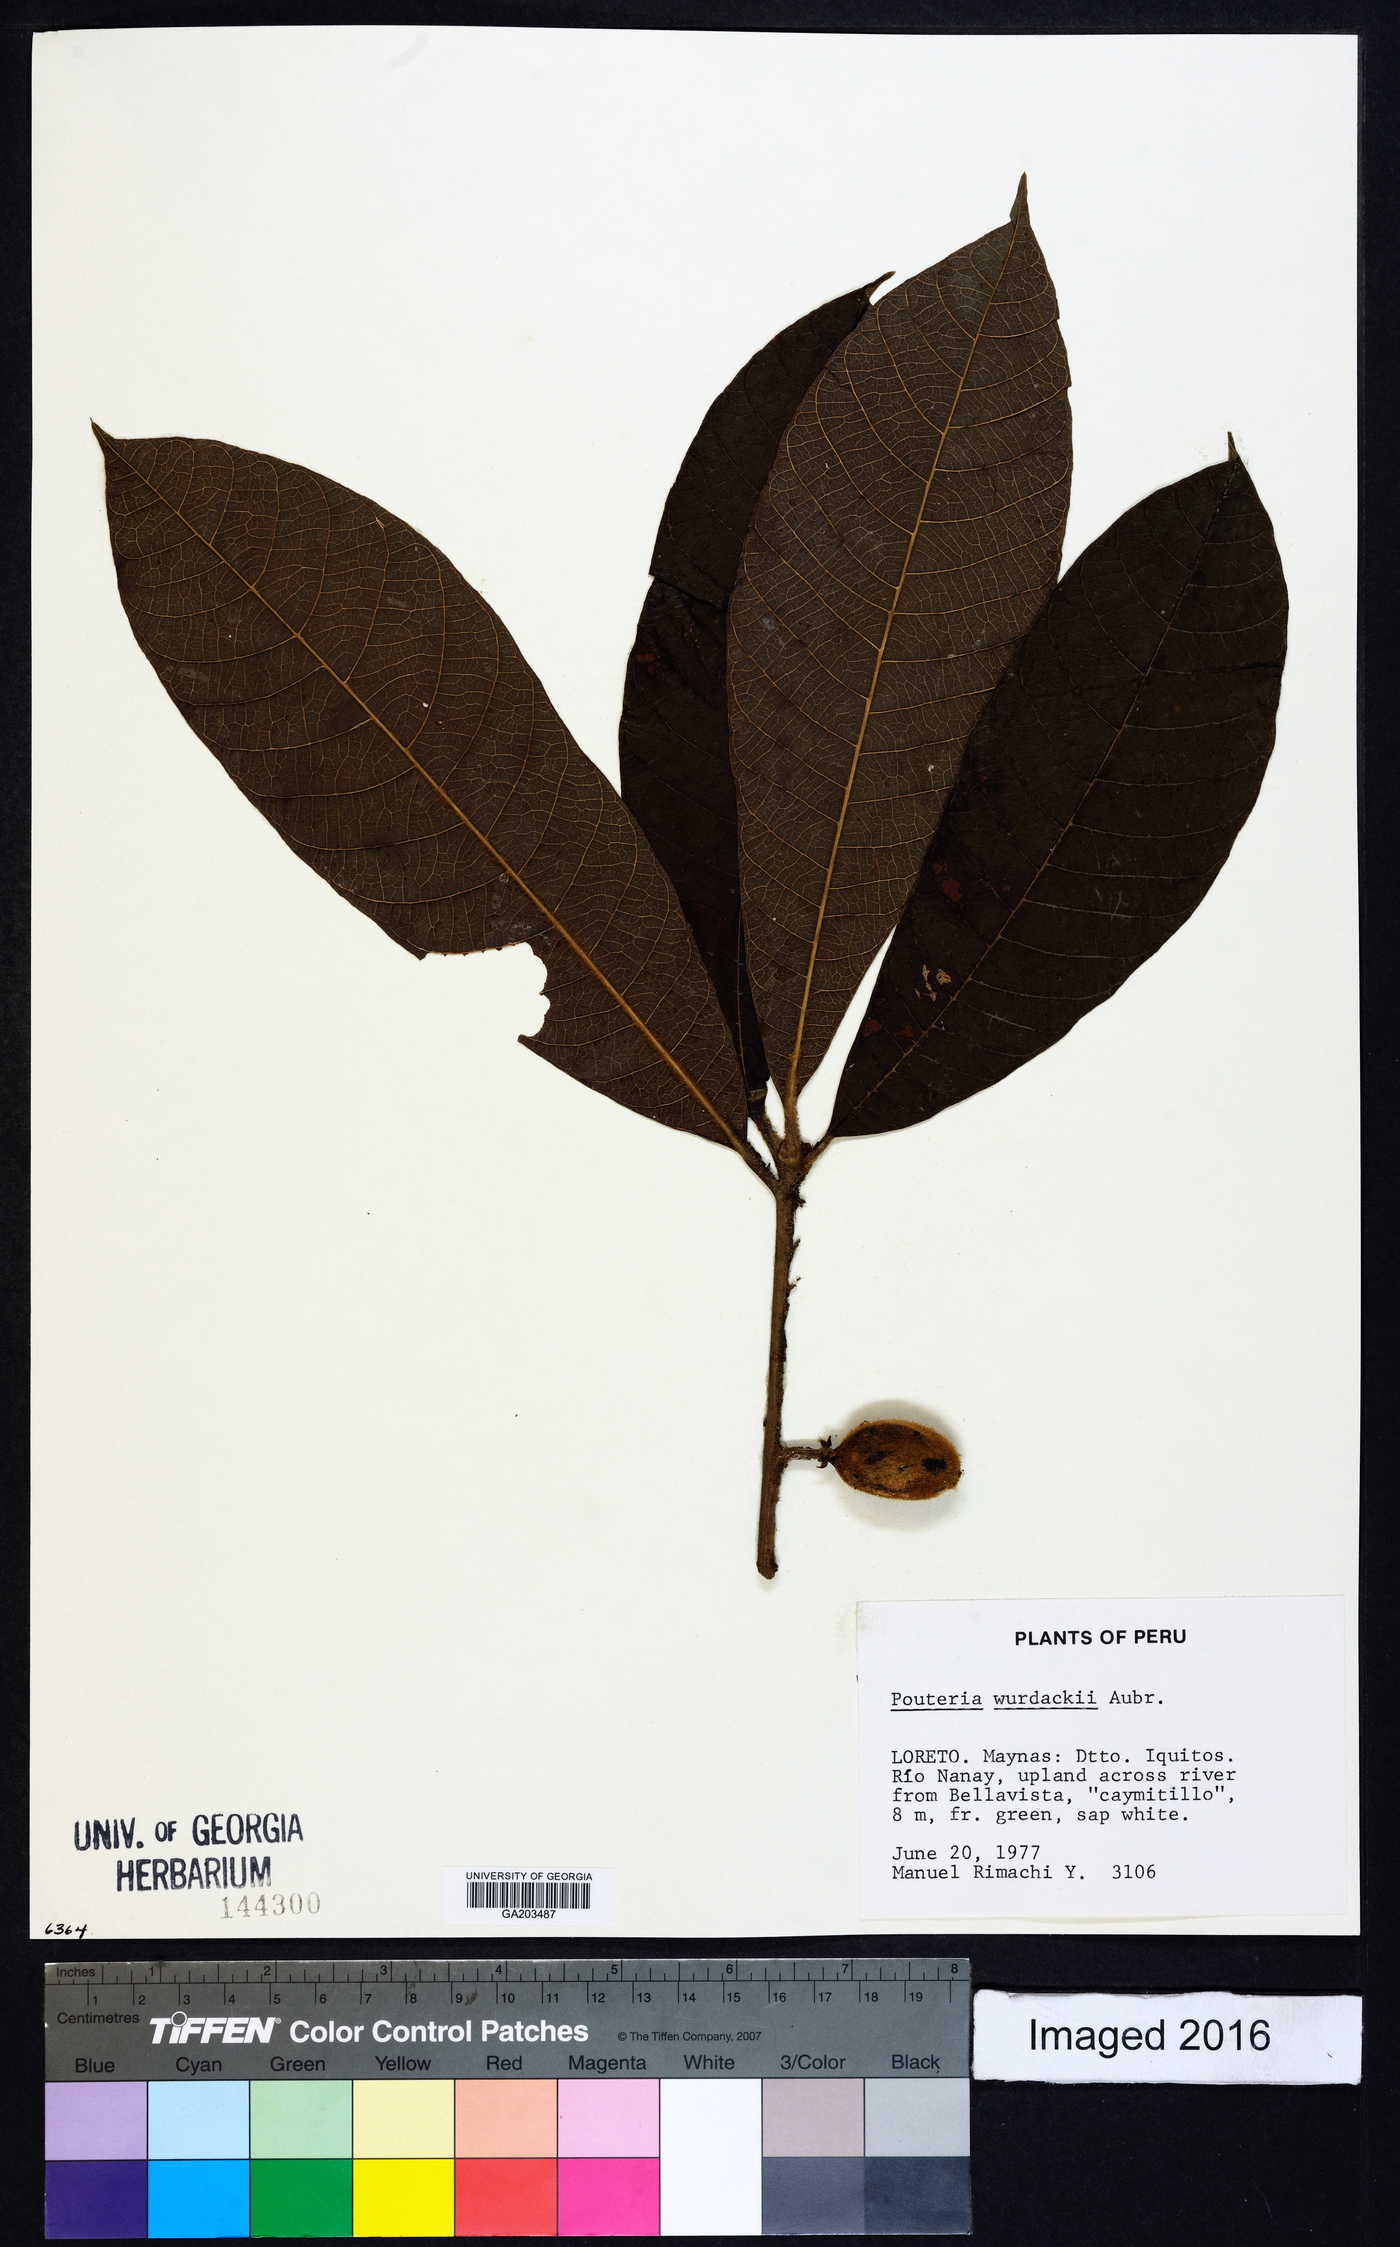 Pouteria torta subsp. tuberculata image